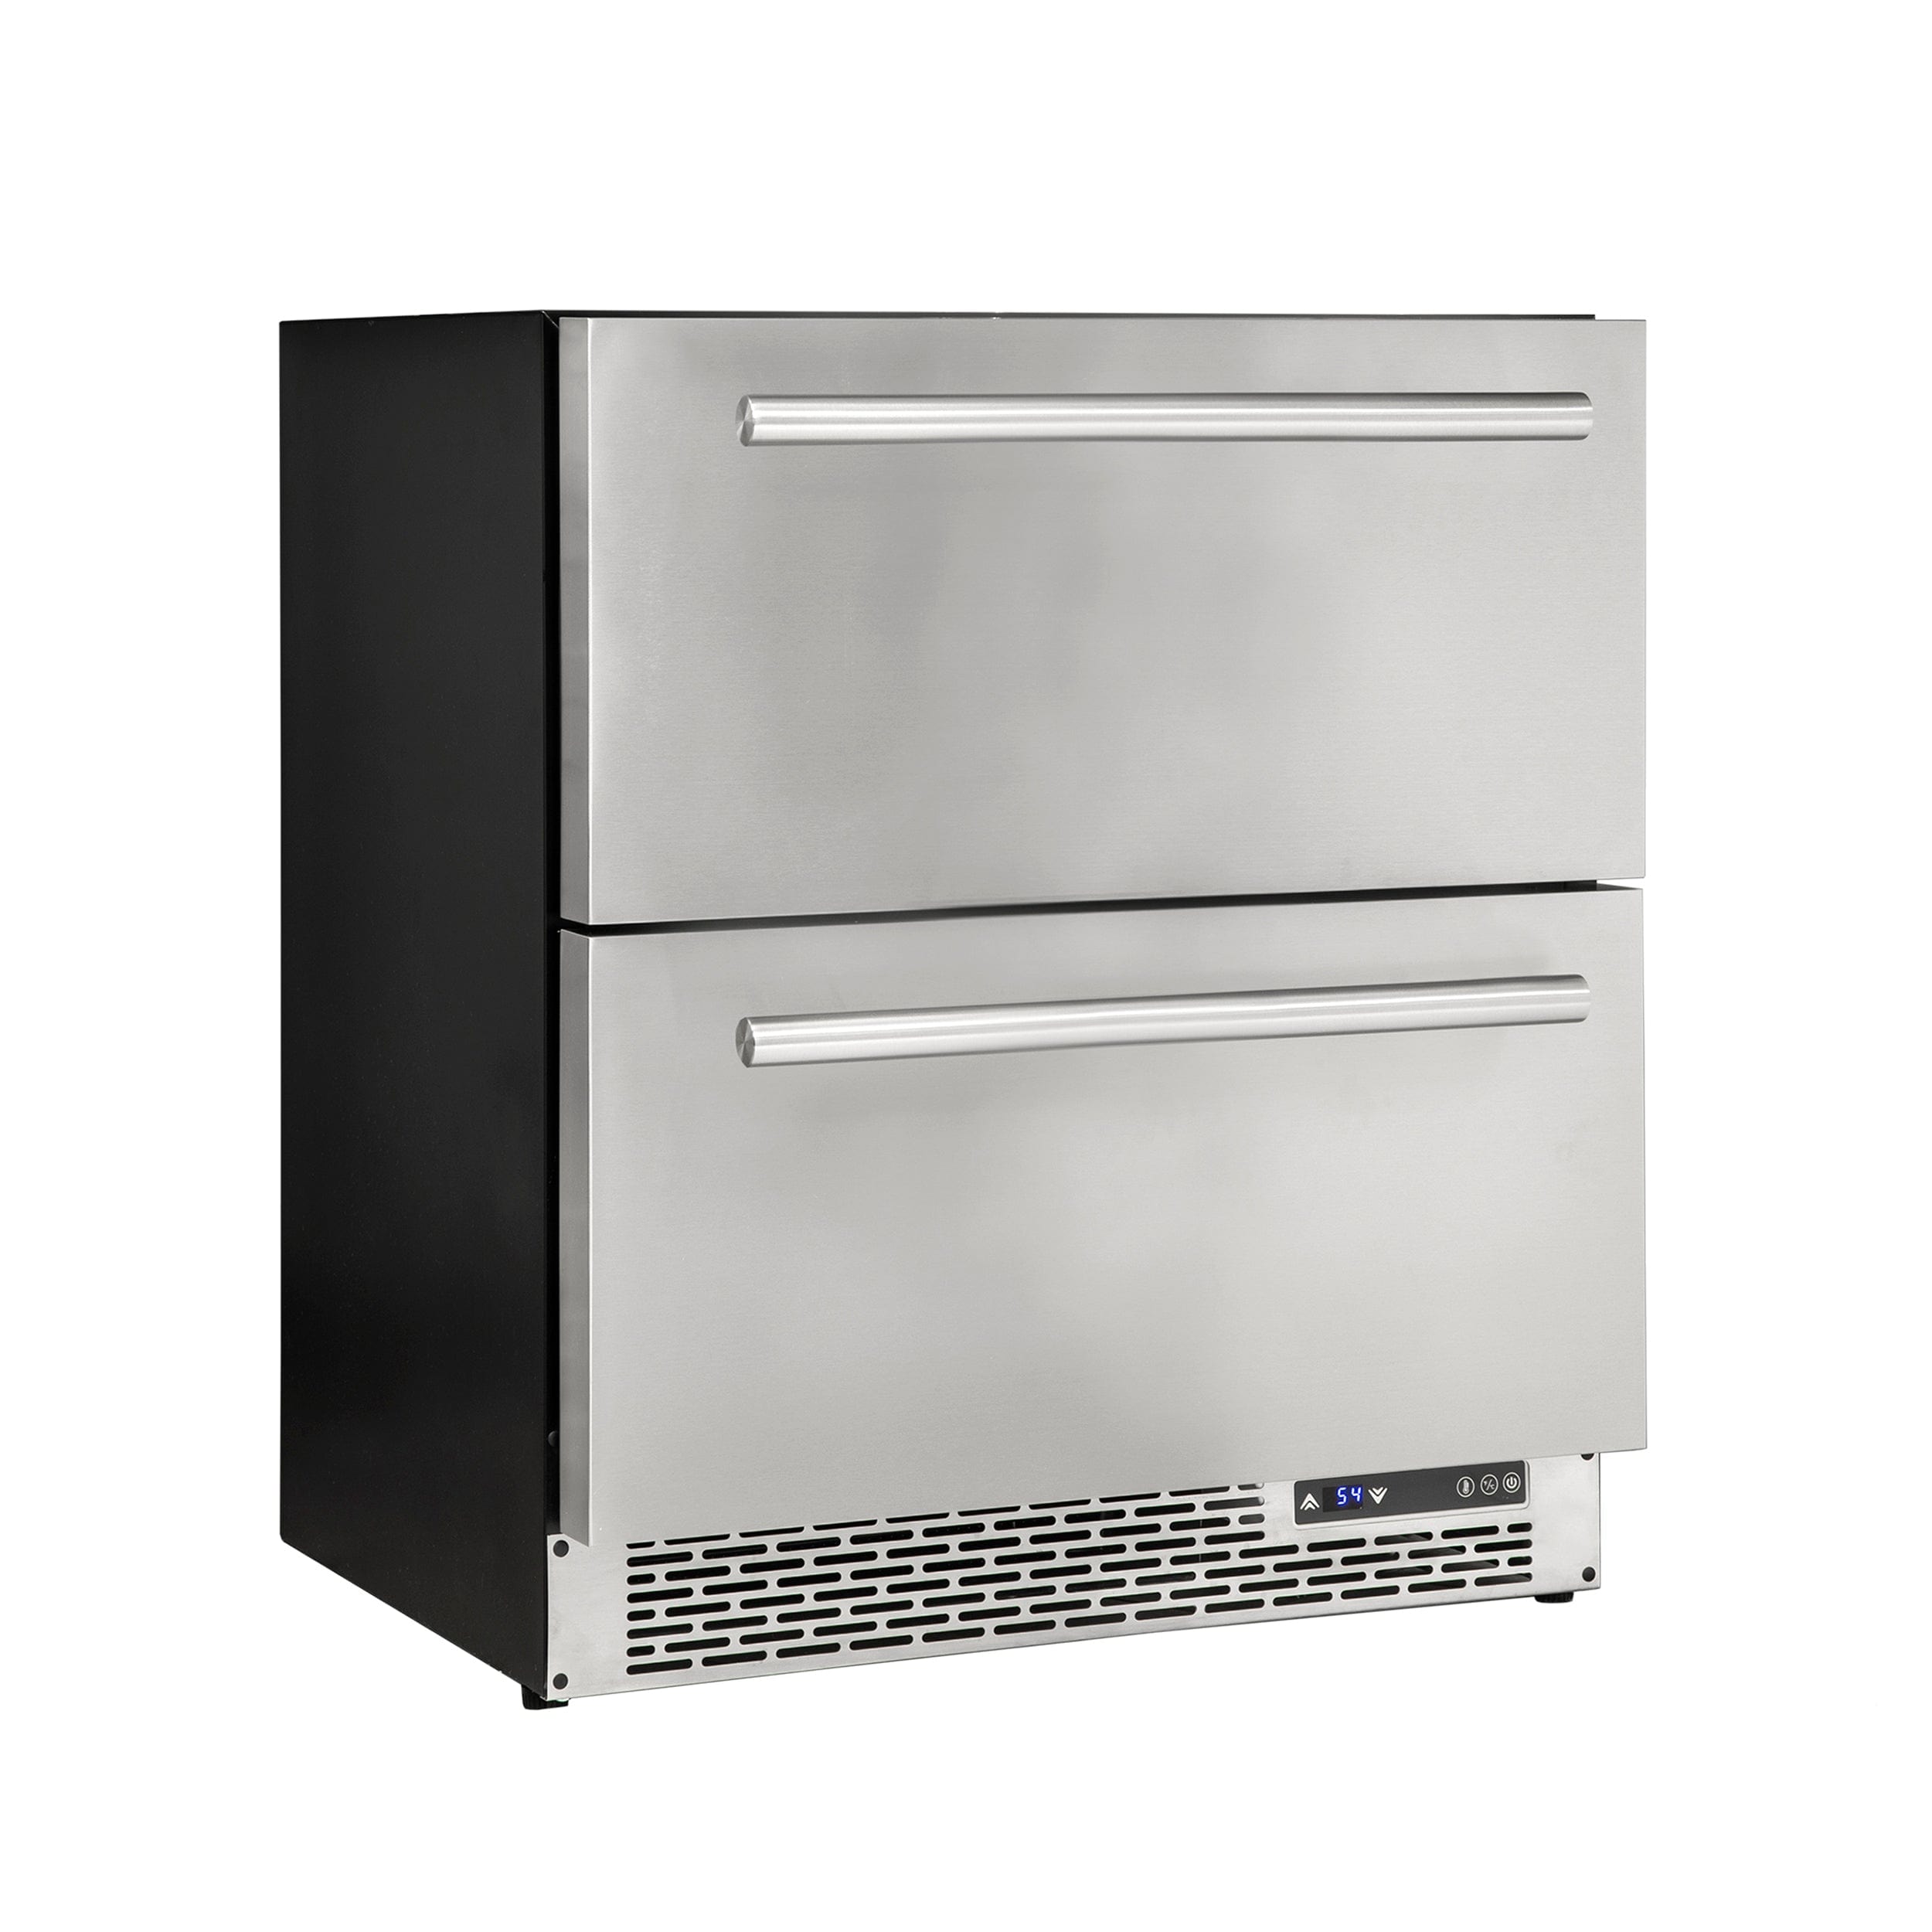 Forno Cologne 30" Stainless Steel Drawer Freezer FDRBI1876-30 Freezers FDRBI1876-30 Luxury Appliances Direct